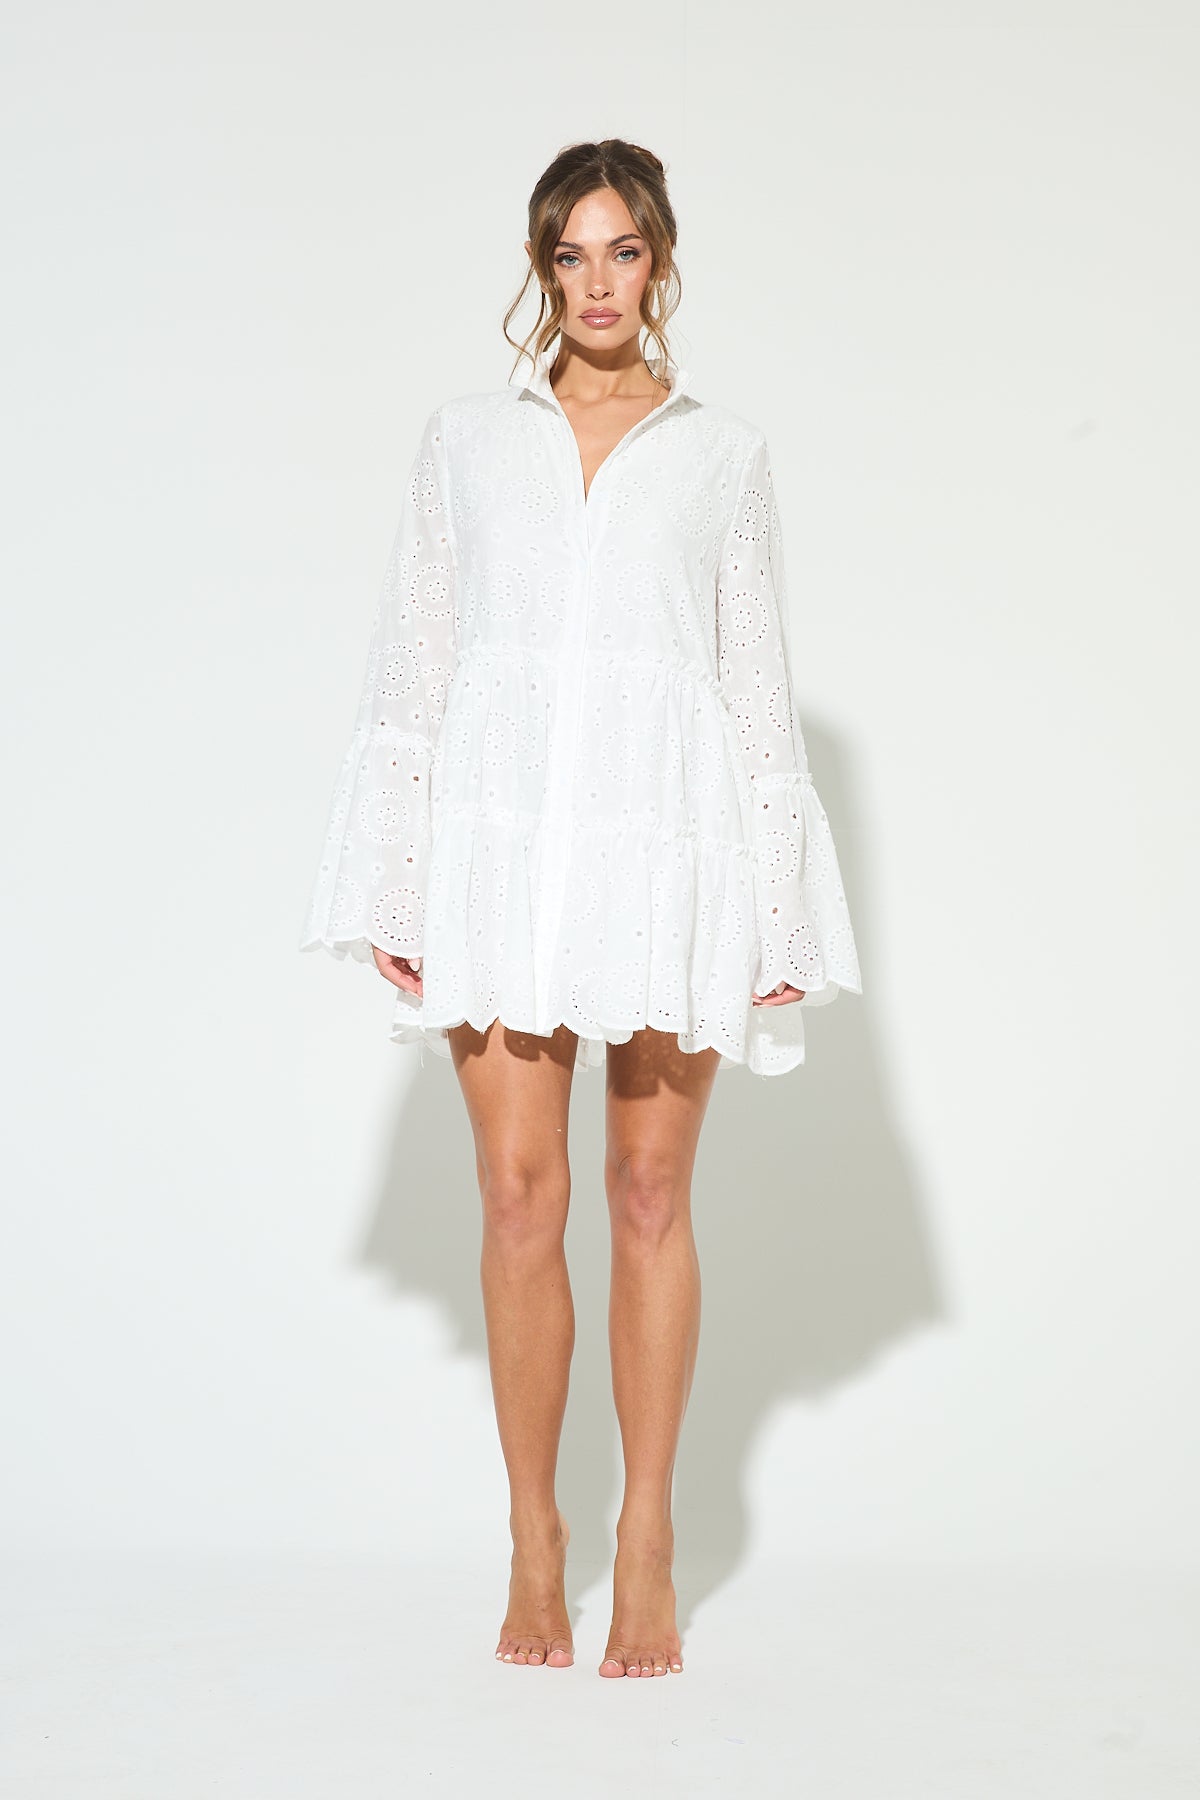 SOFIA White Embroidered Dress